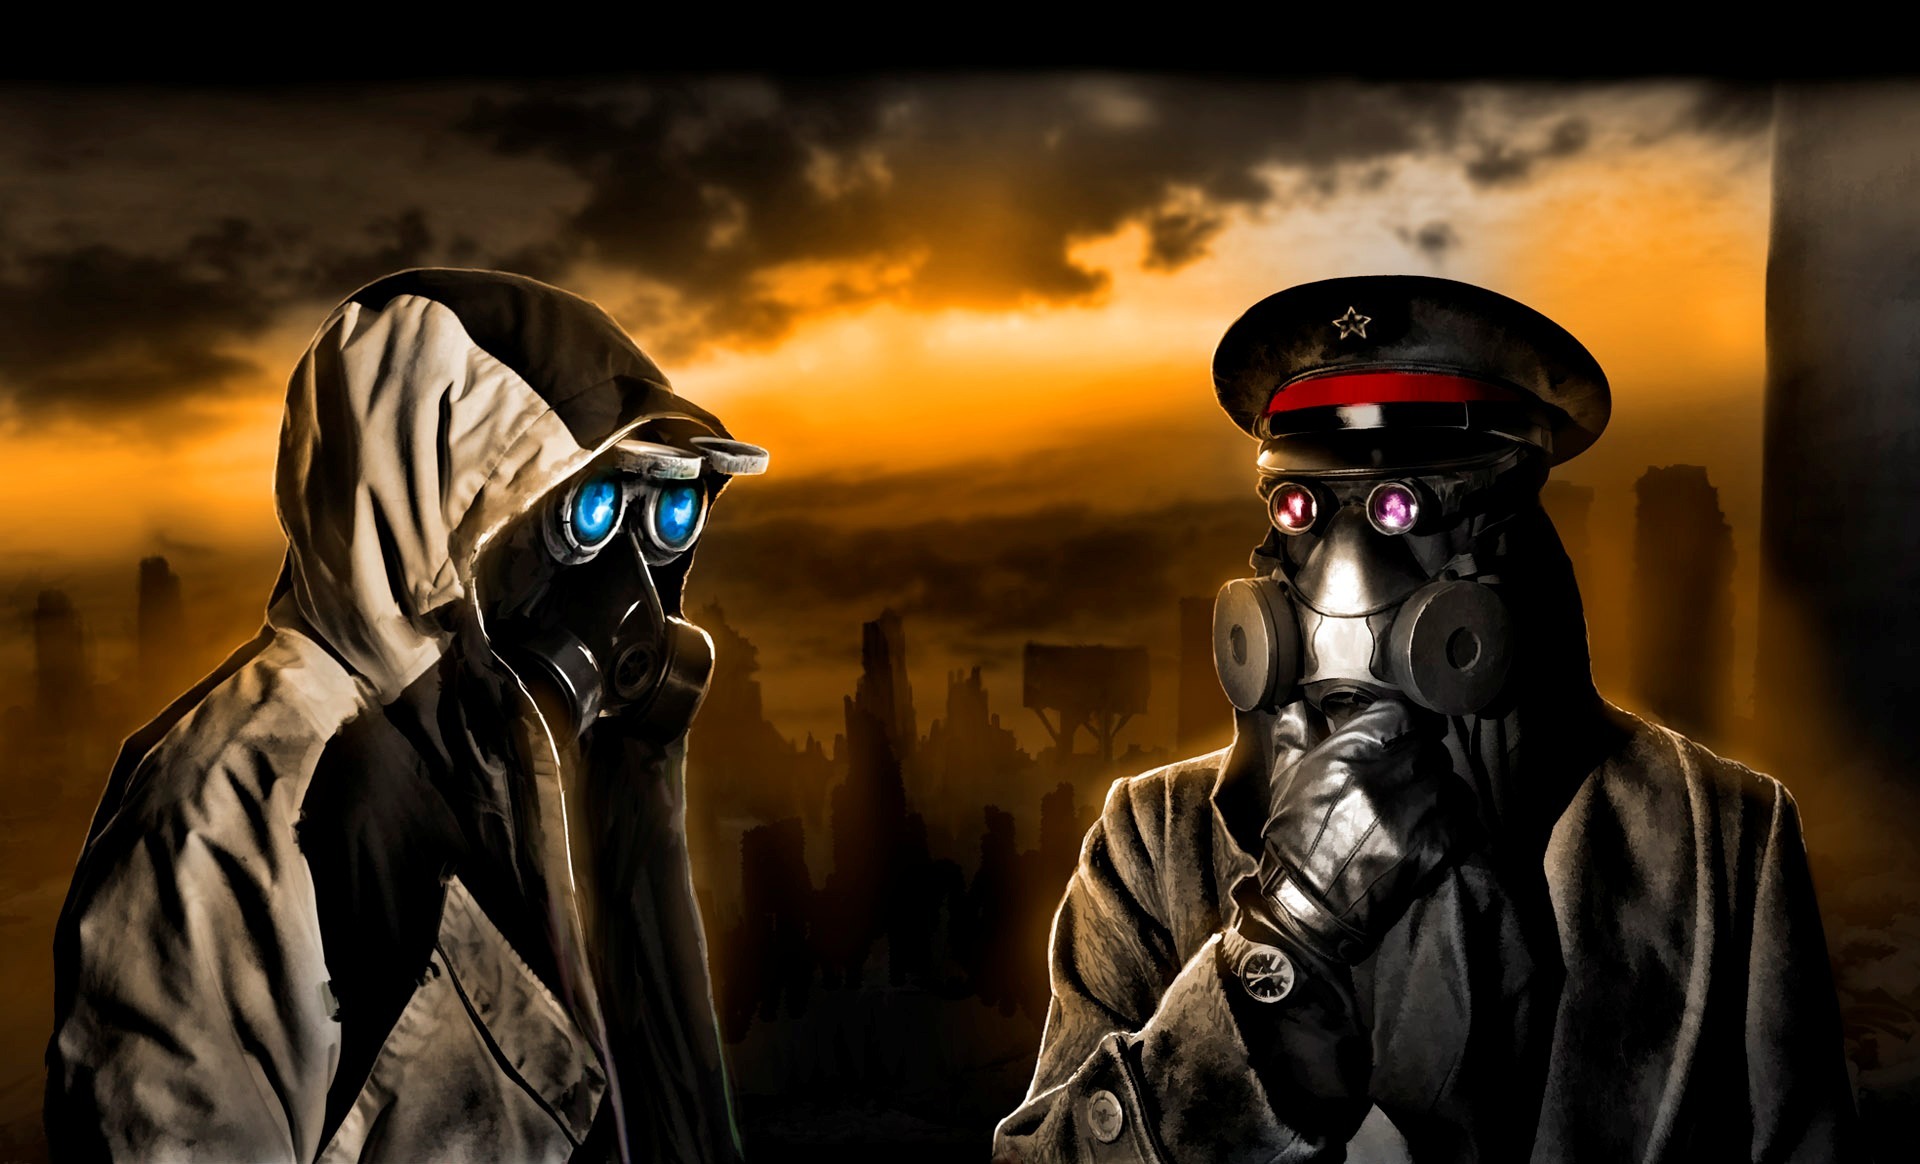 Photos Romantically Apocalyptic Heroes comics Gas mask Fantasy superheroes